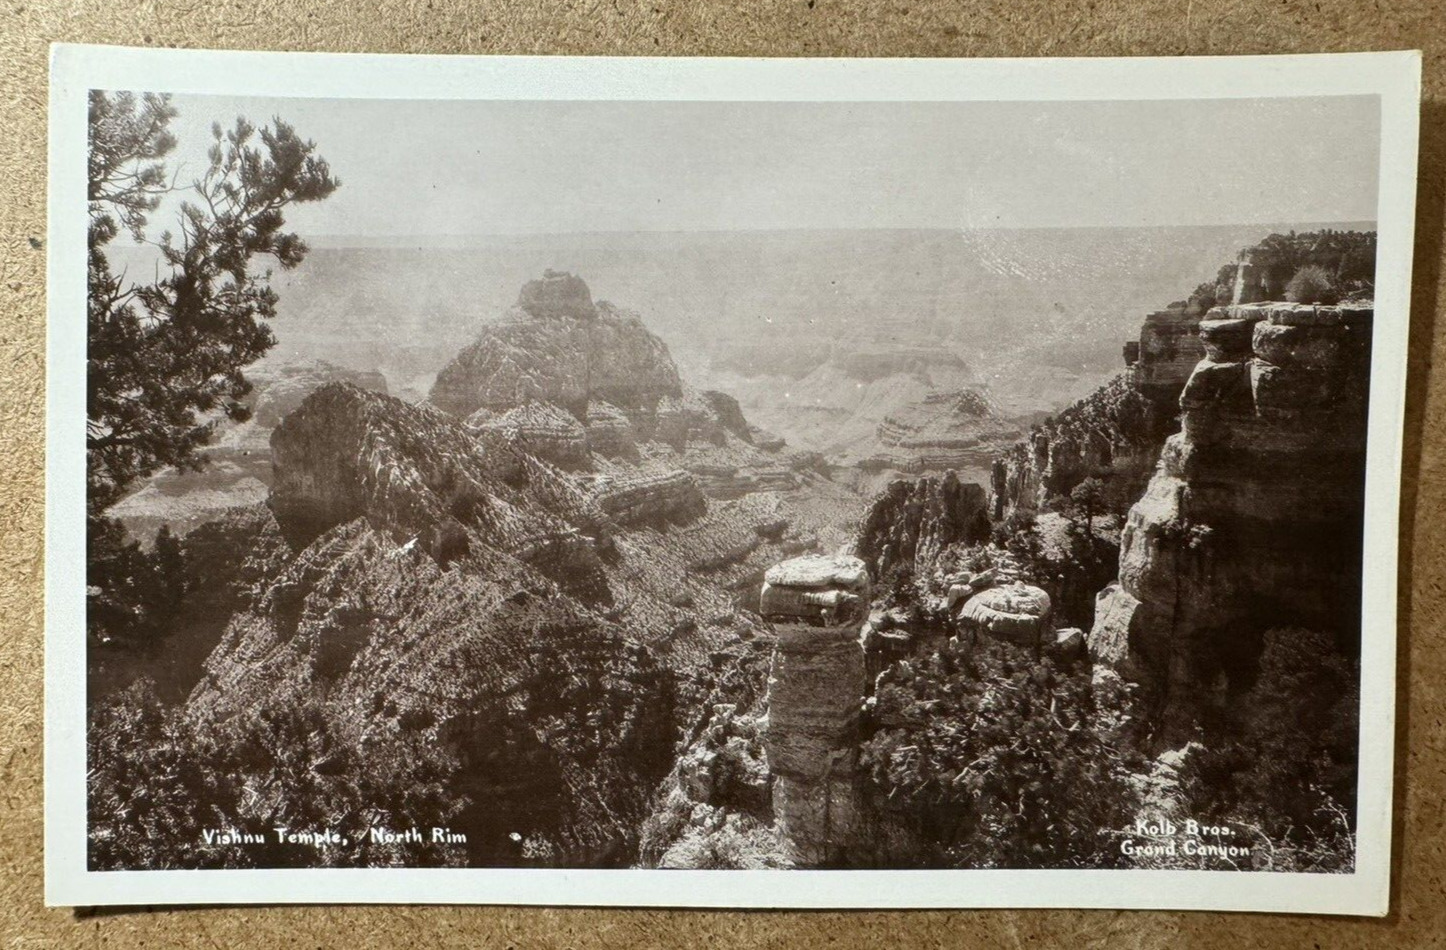 Vishnu Temple North Rim Grand Canyon AZ RPPC Real Photo Postcard 1937 Kolb Bros